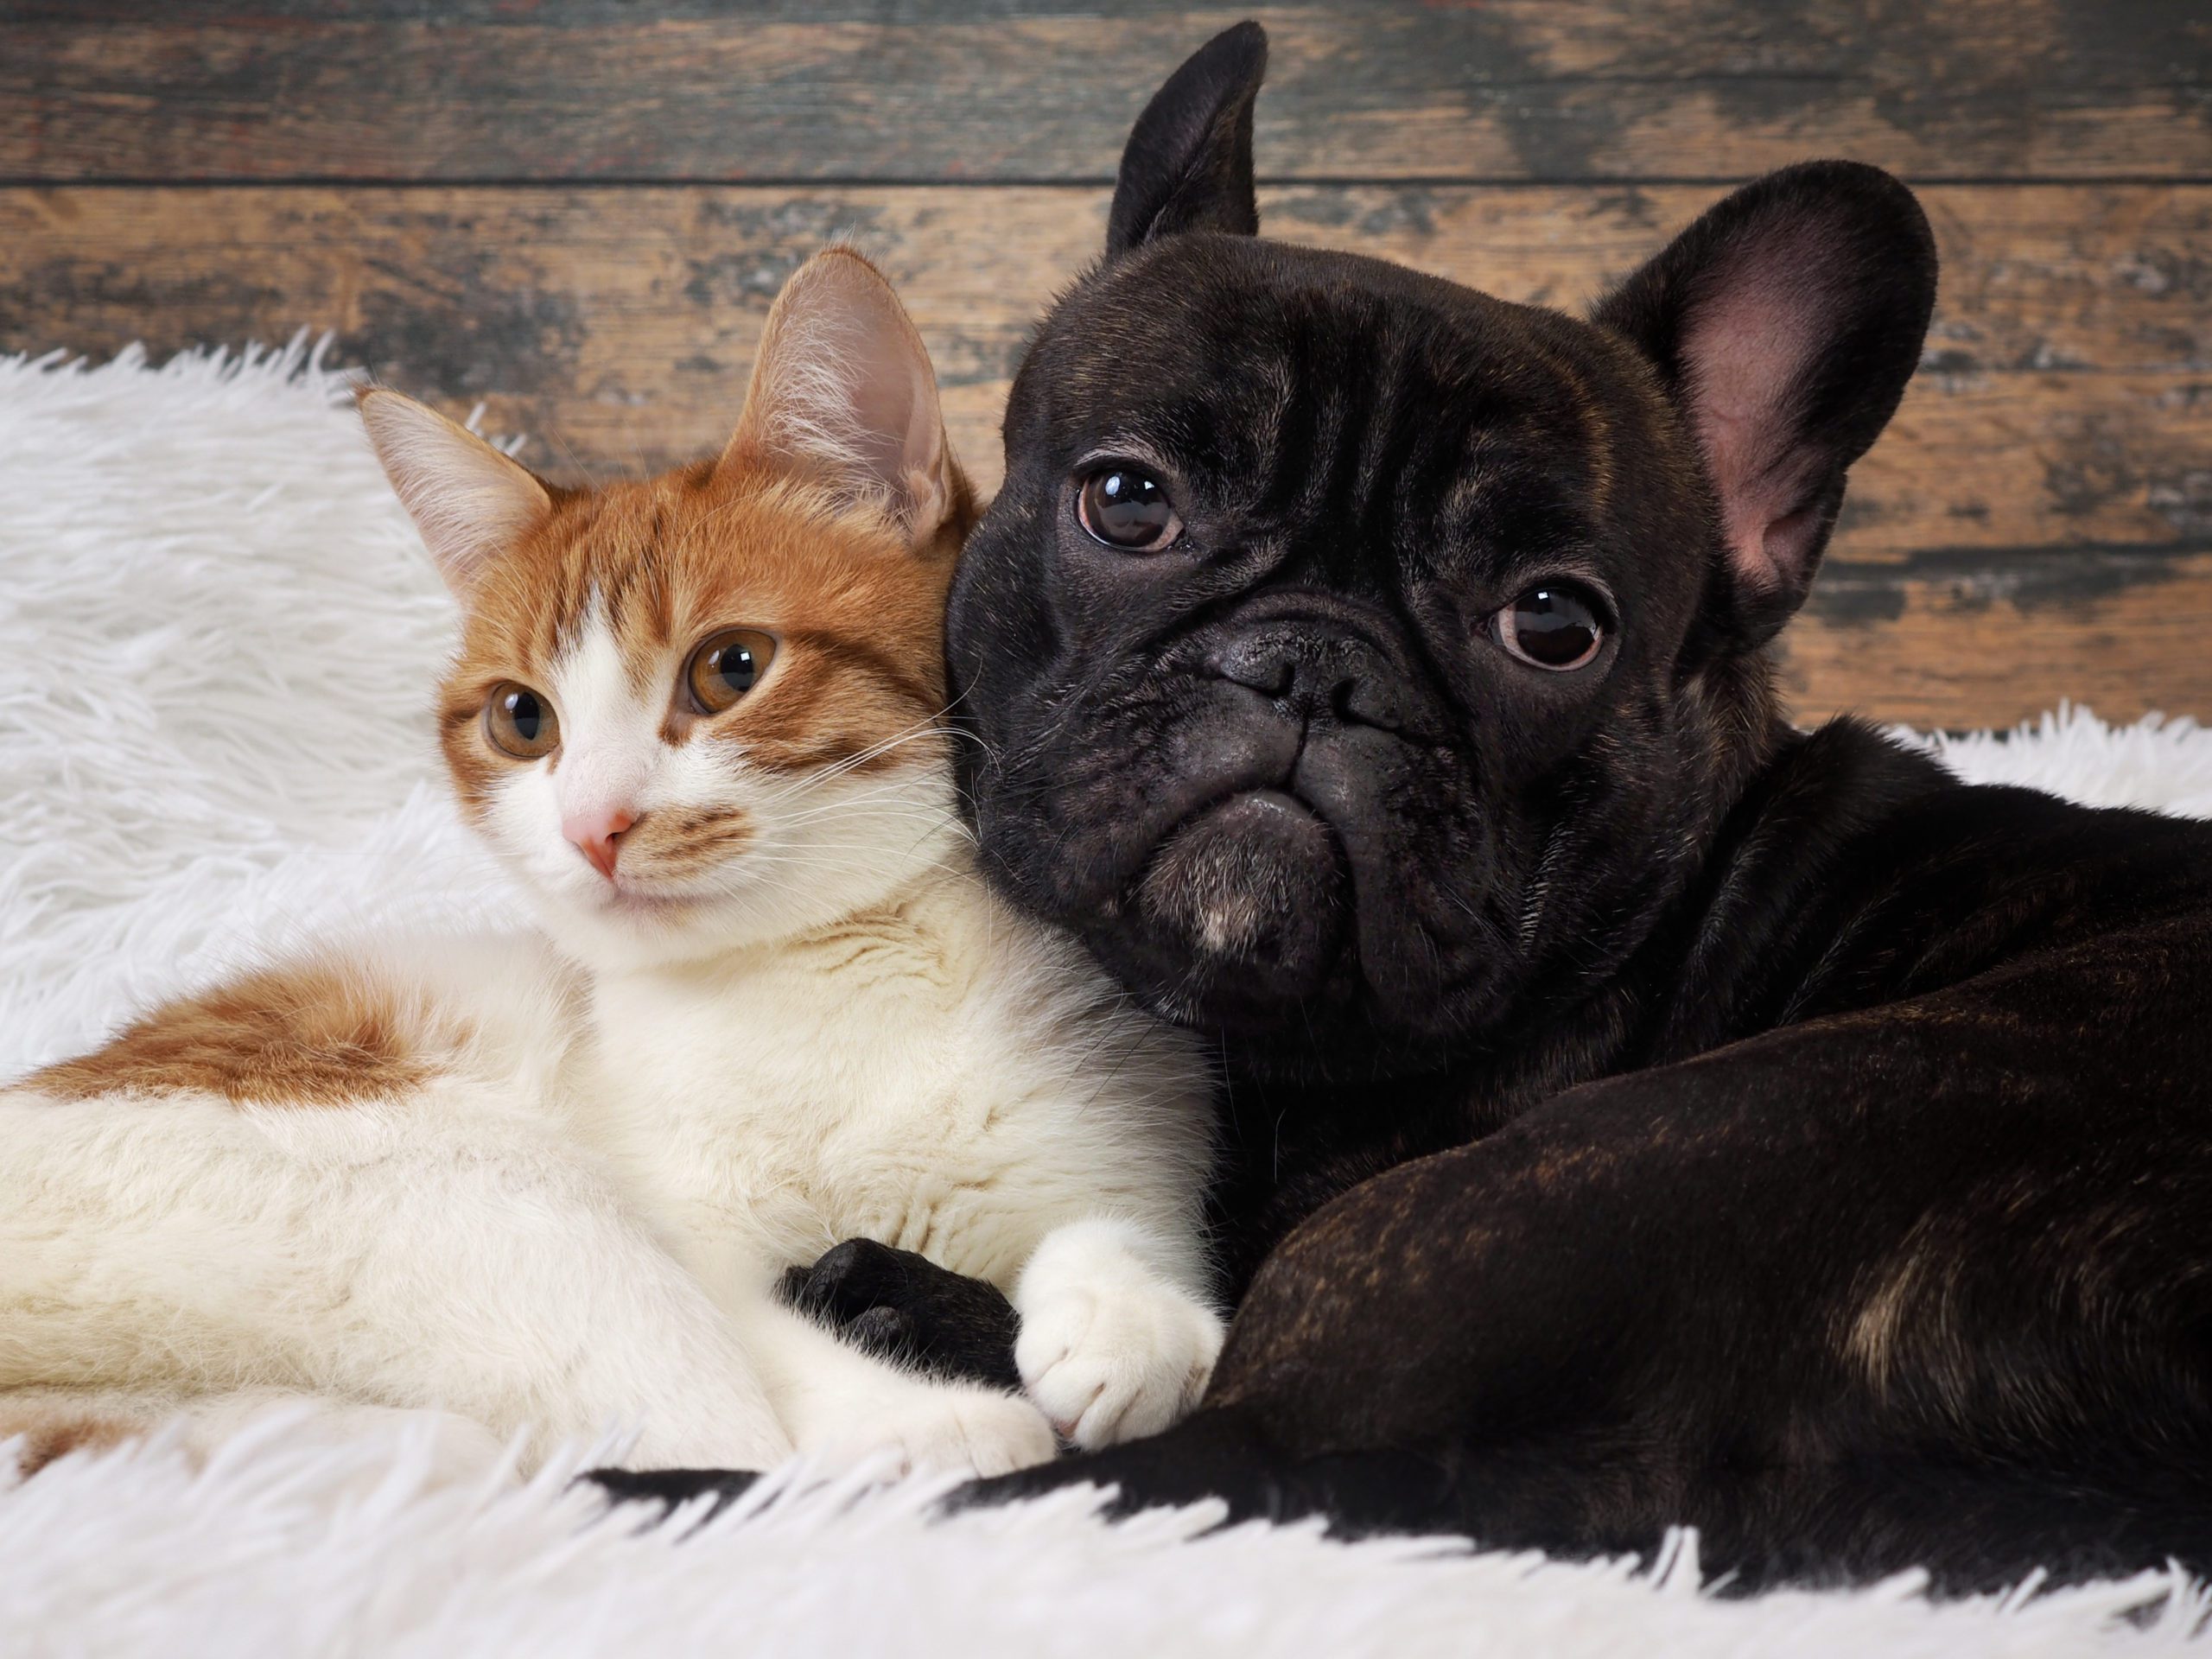 Cat and dog cuddling. Cute Pets. Portrait